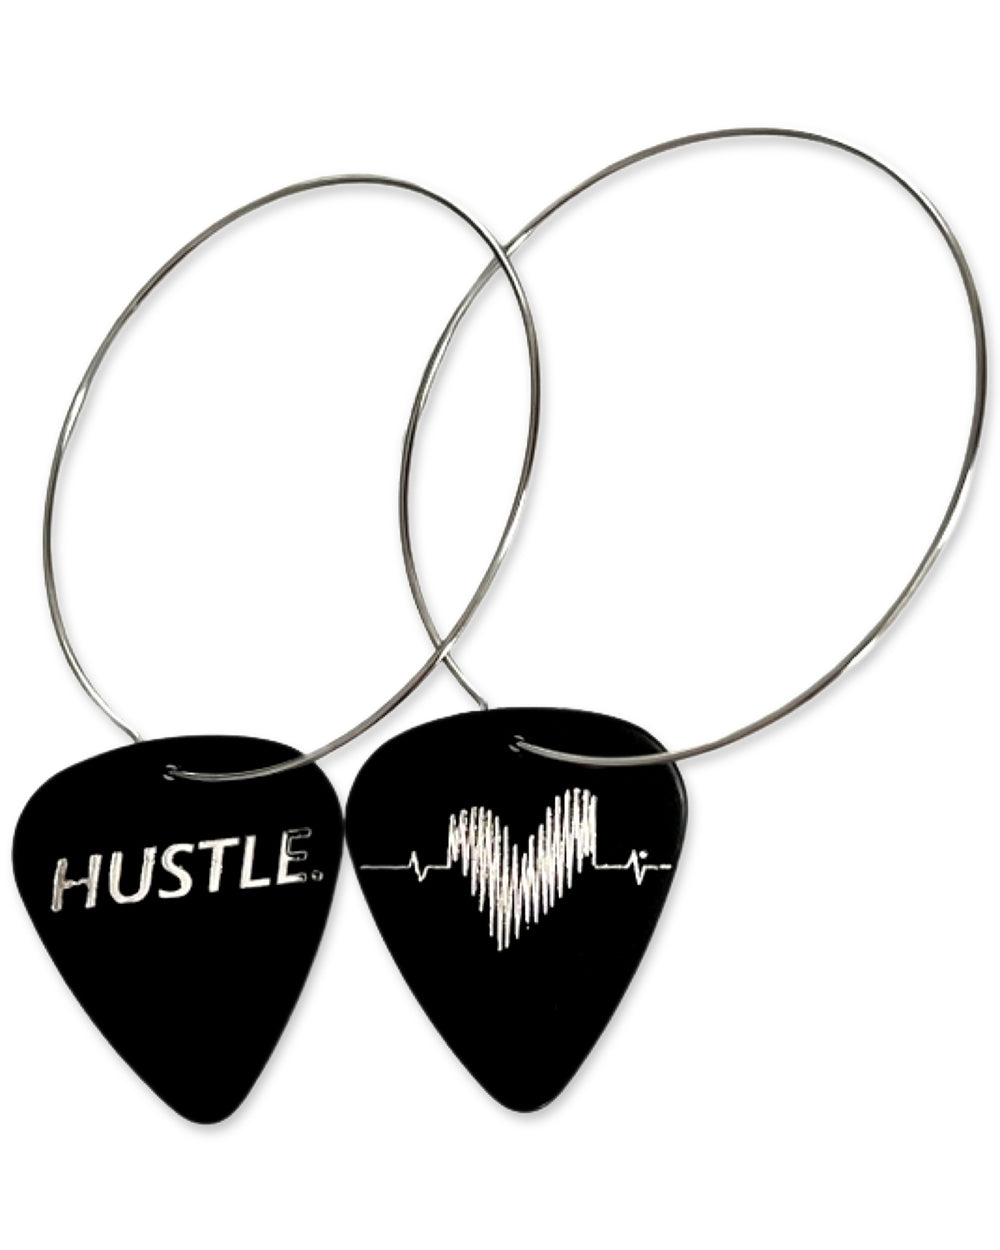 WS HUSTLE. Reversible Black Single Guitar Pick Earrings